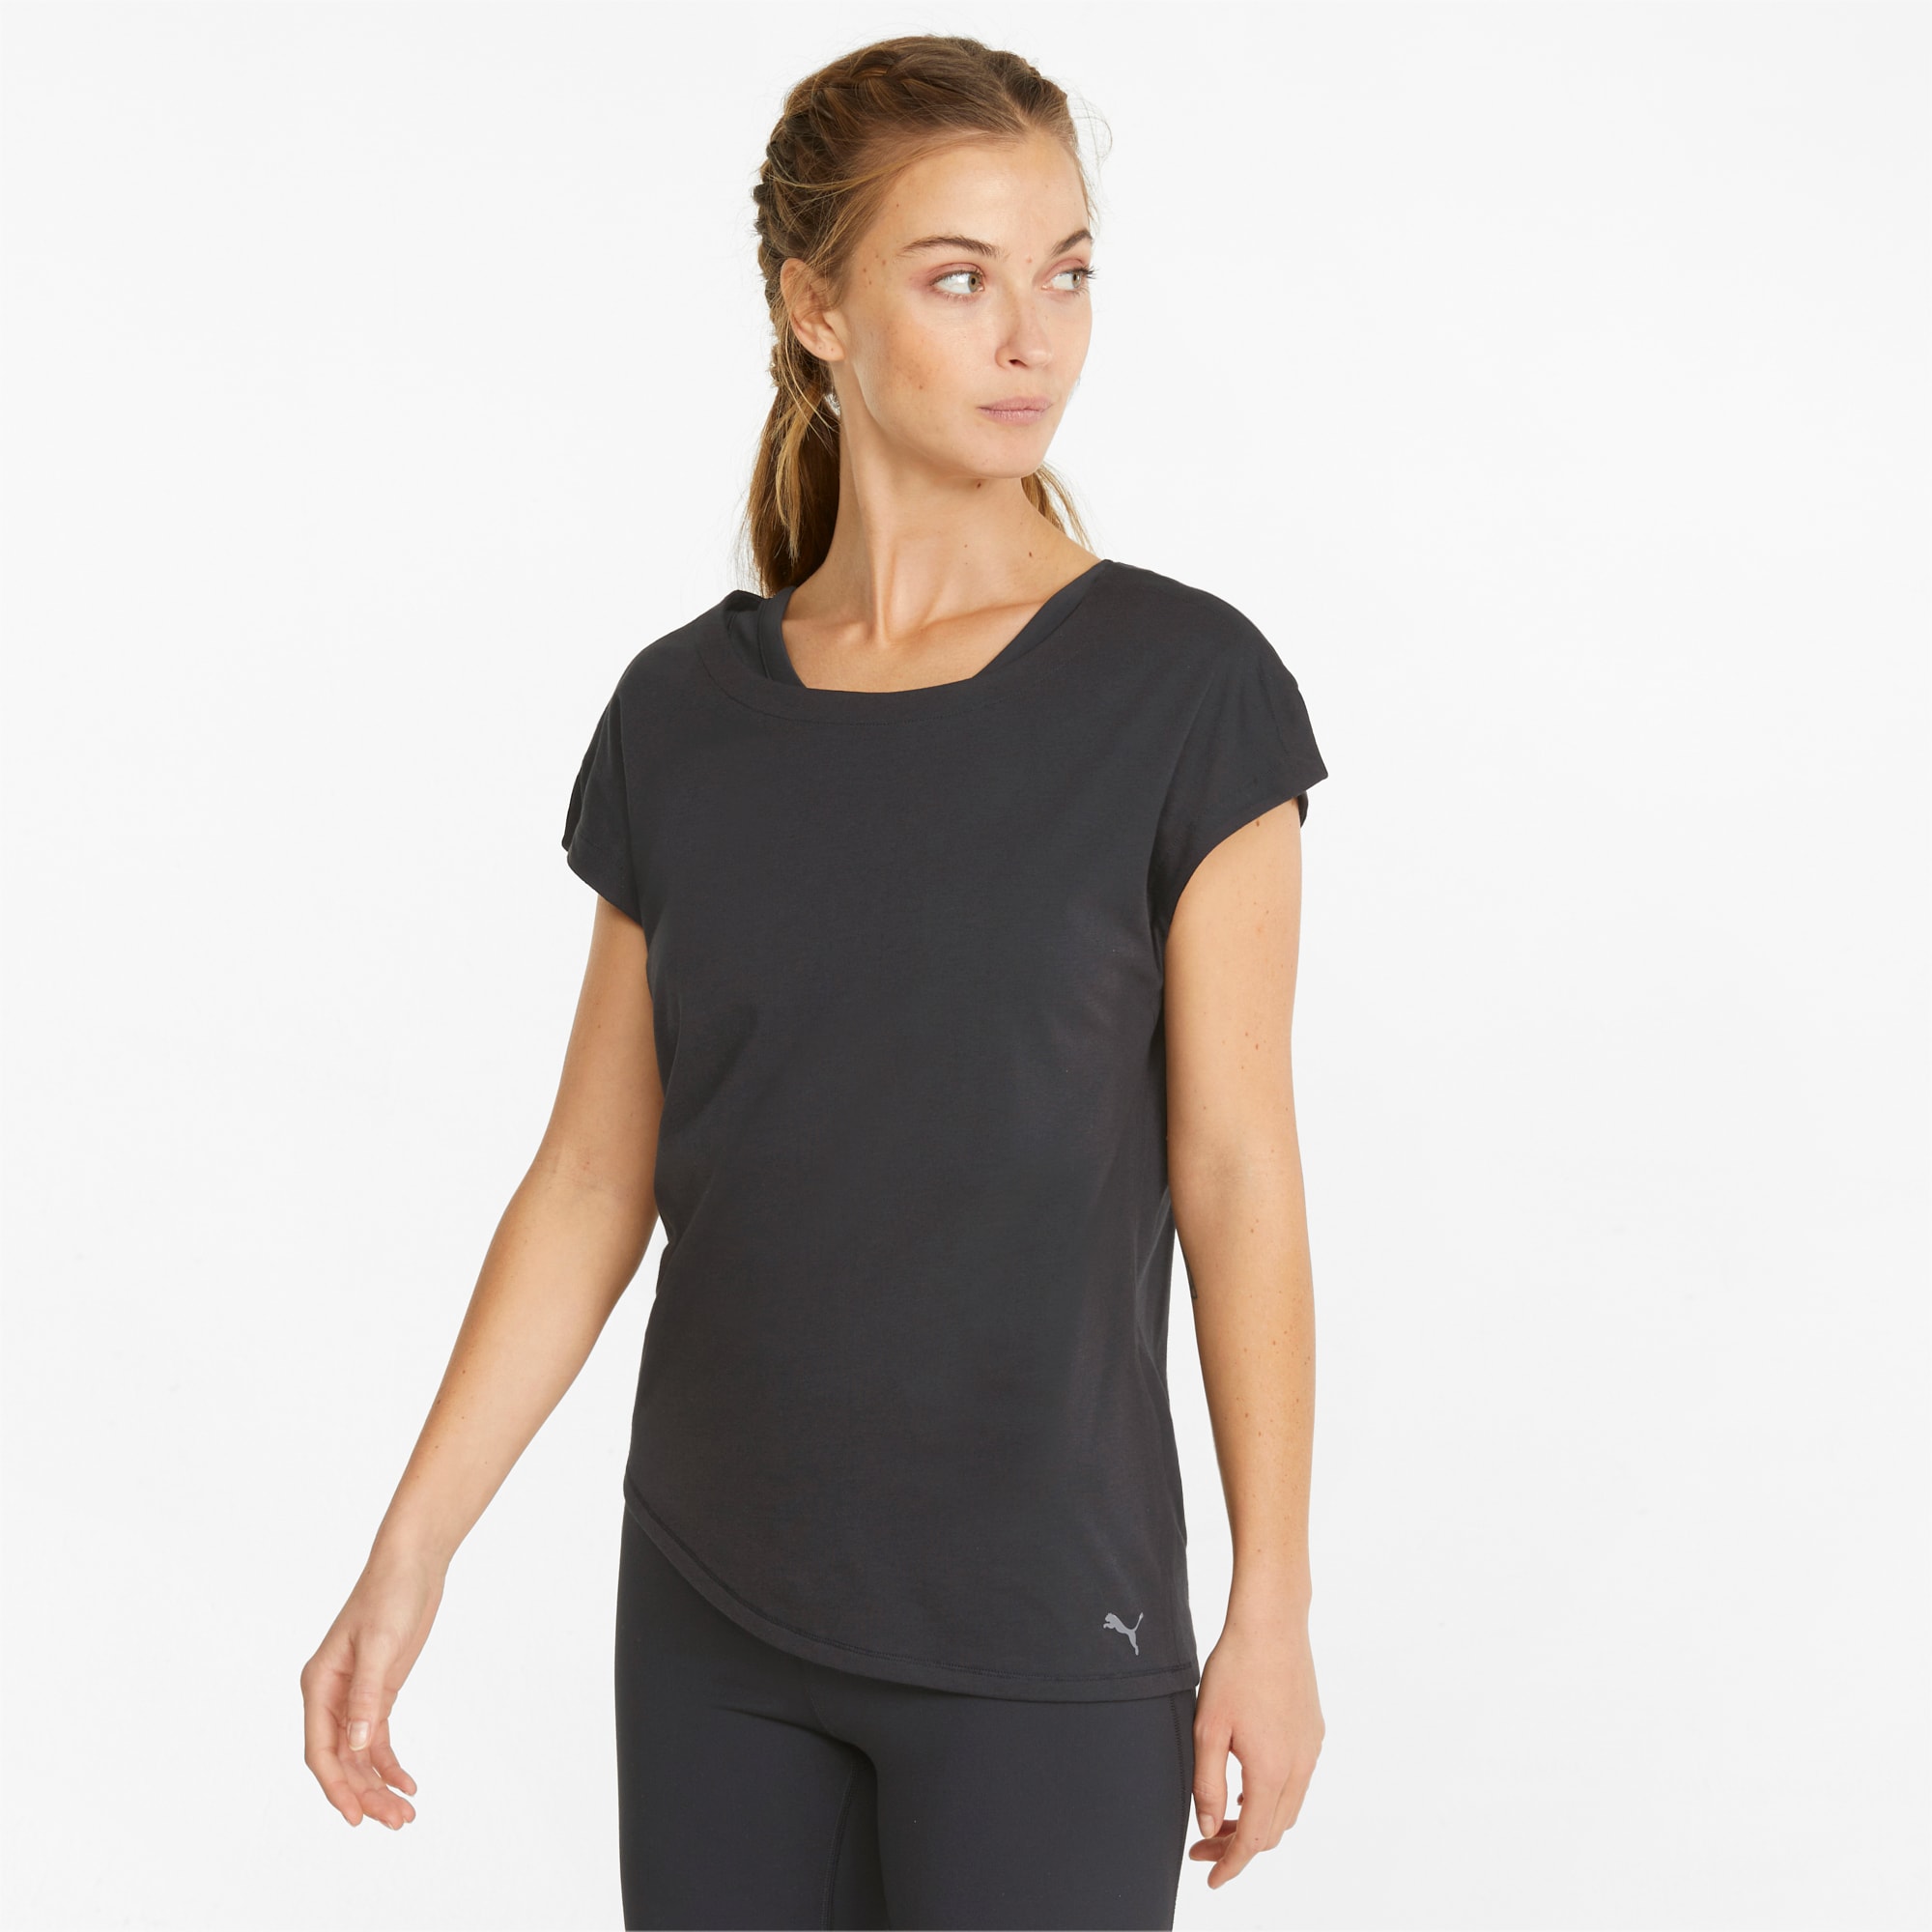 PUMA Studio Foundation Women's Training T-Shirt, Black, Size XL, Clothing